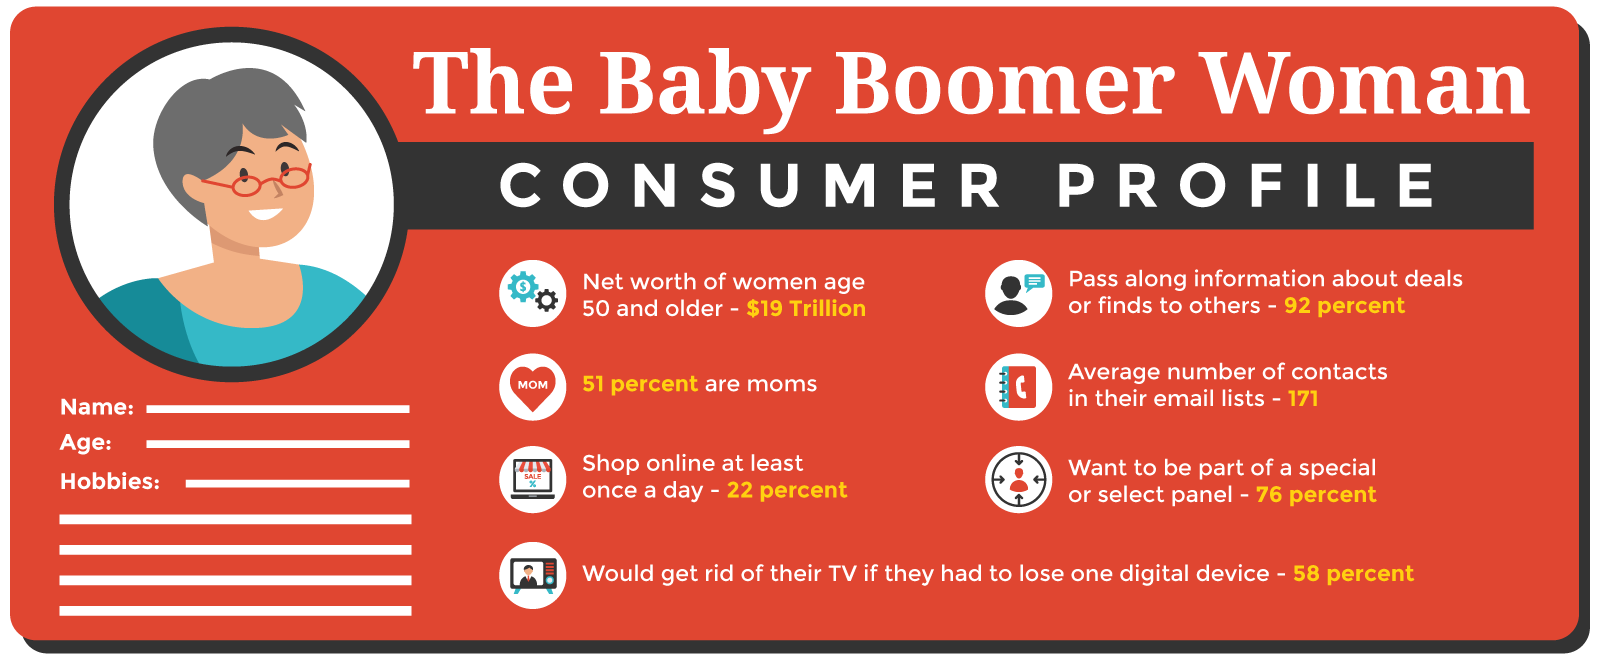 baby boomer woman consumer profile